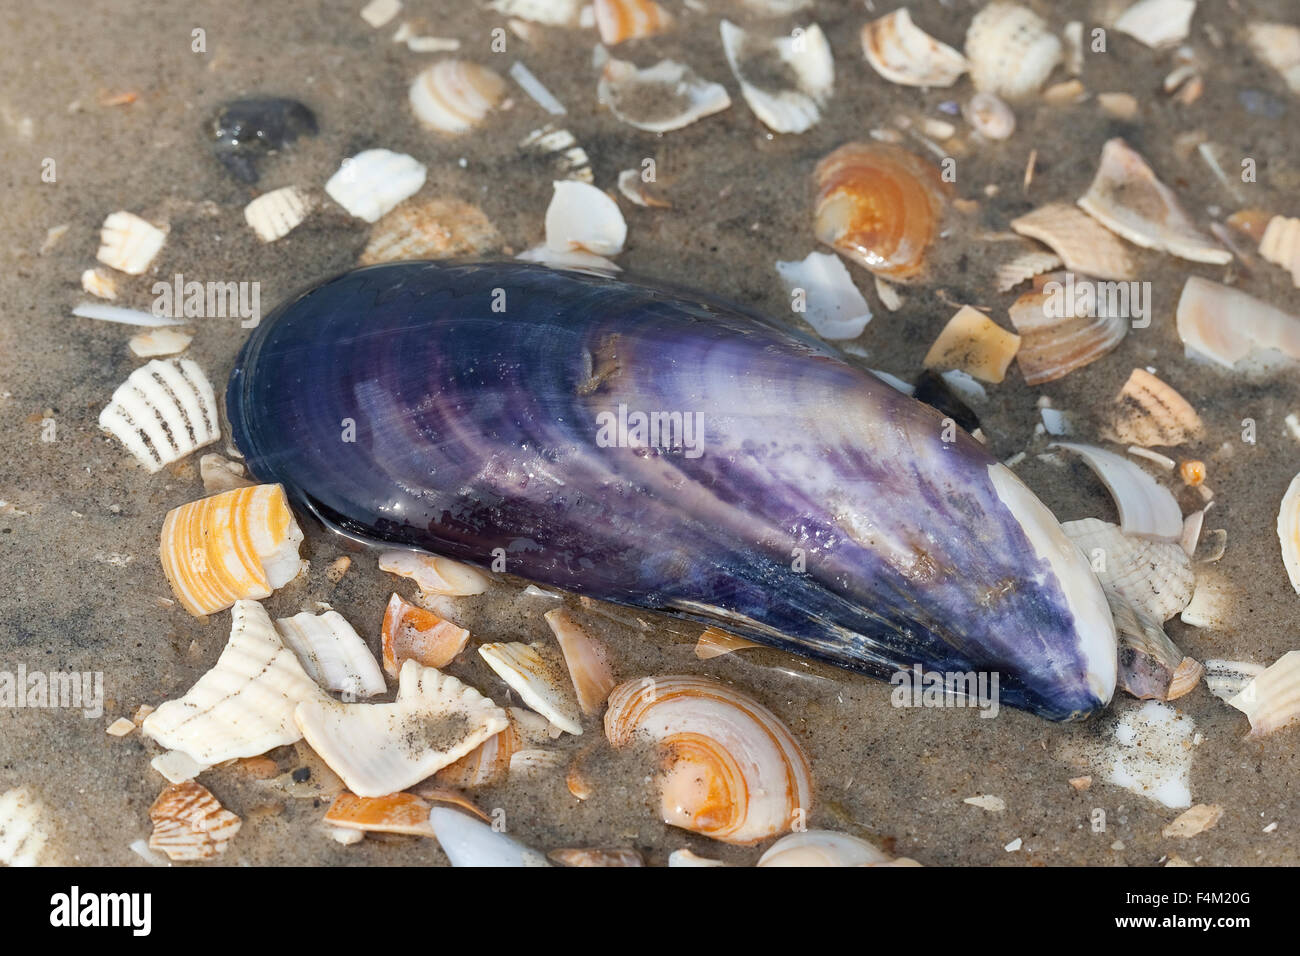 Bay mussel, common mussel, common blue mussel, Gemeine Miesmuschel, Pfahlmuschel, Schale, Mytilus edulis Stock Photo